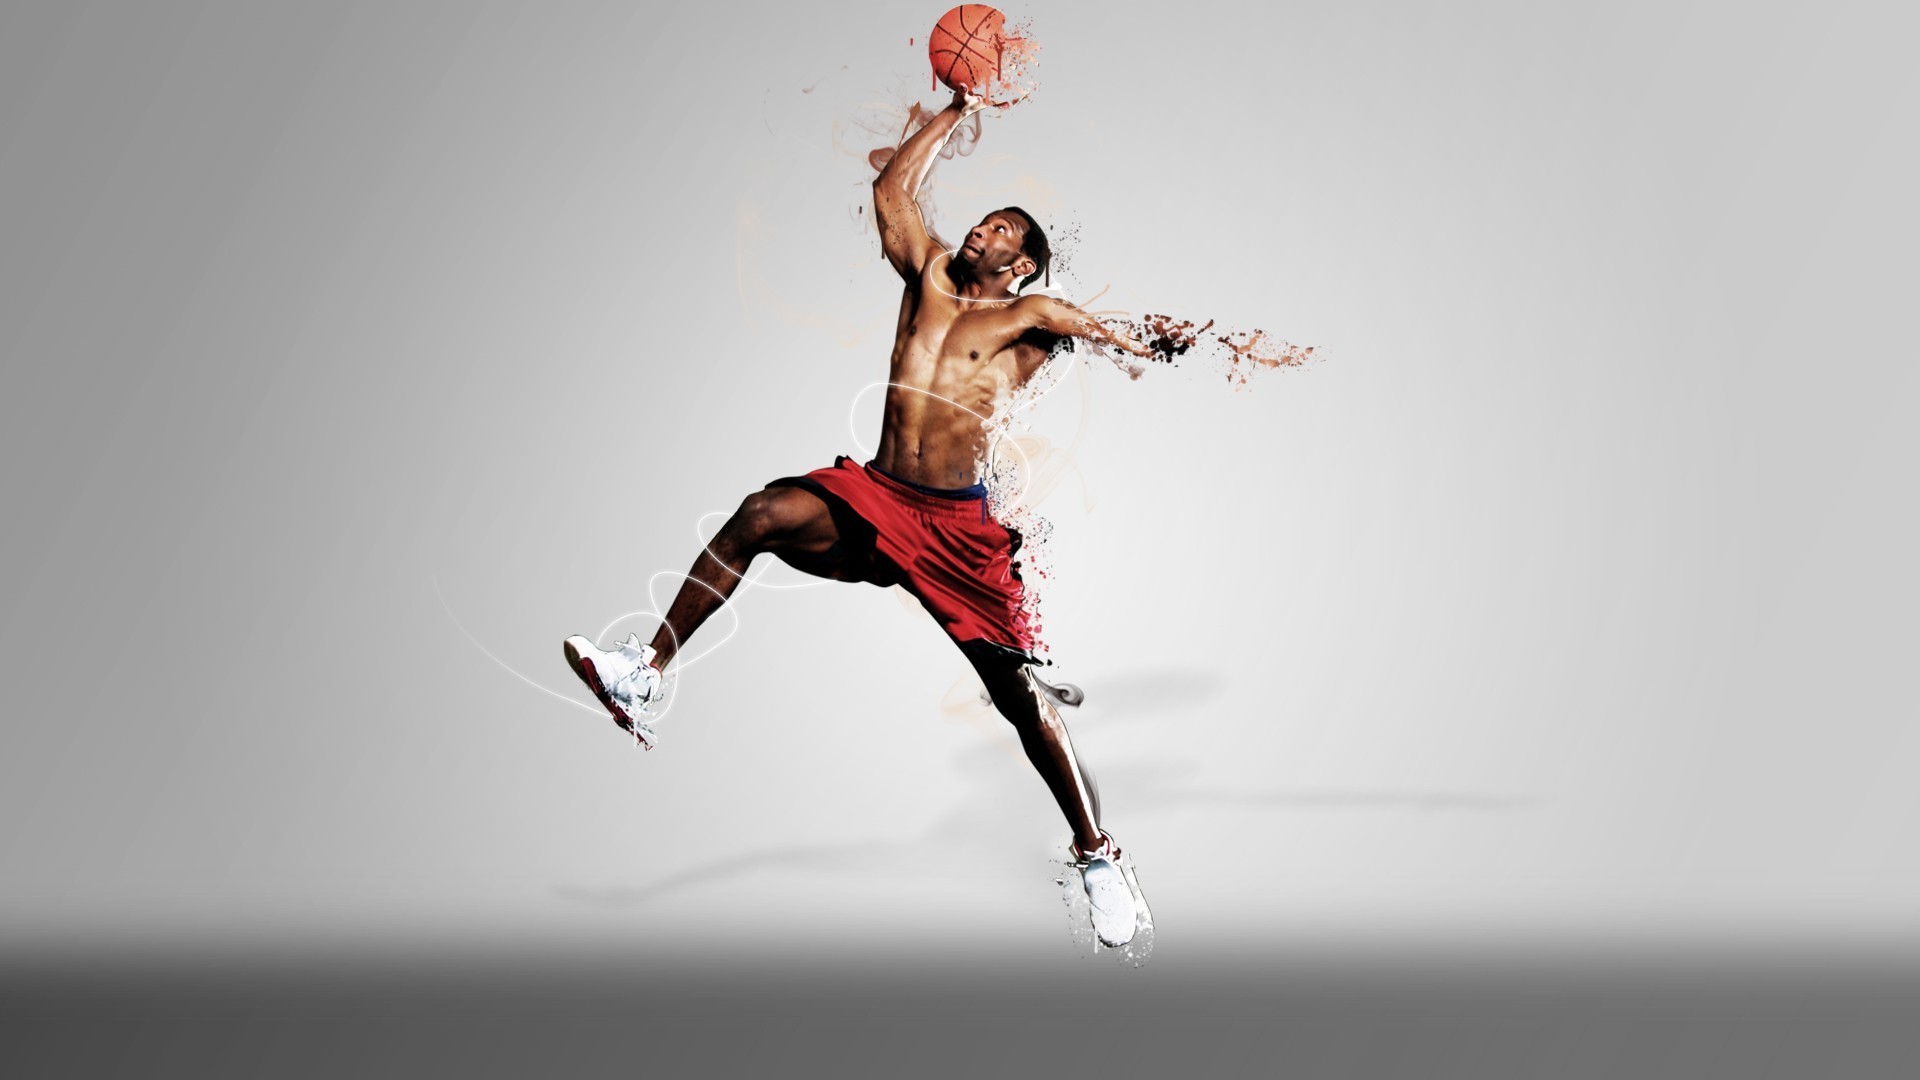 Basketball Player wallpaper HD. Free desktop background 2016 in ...